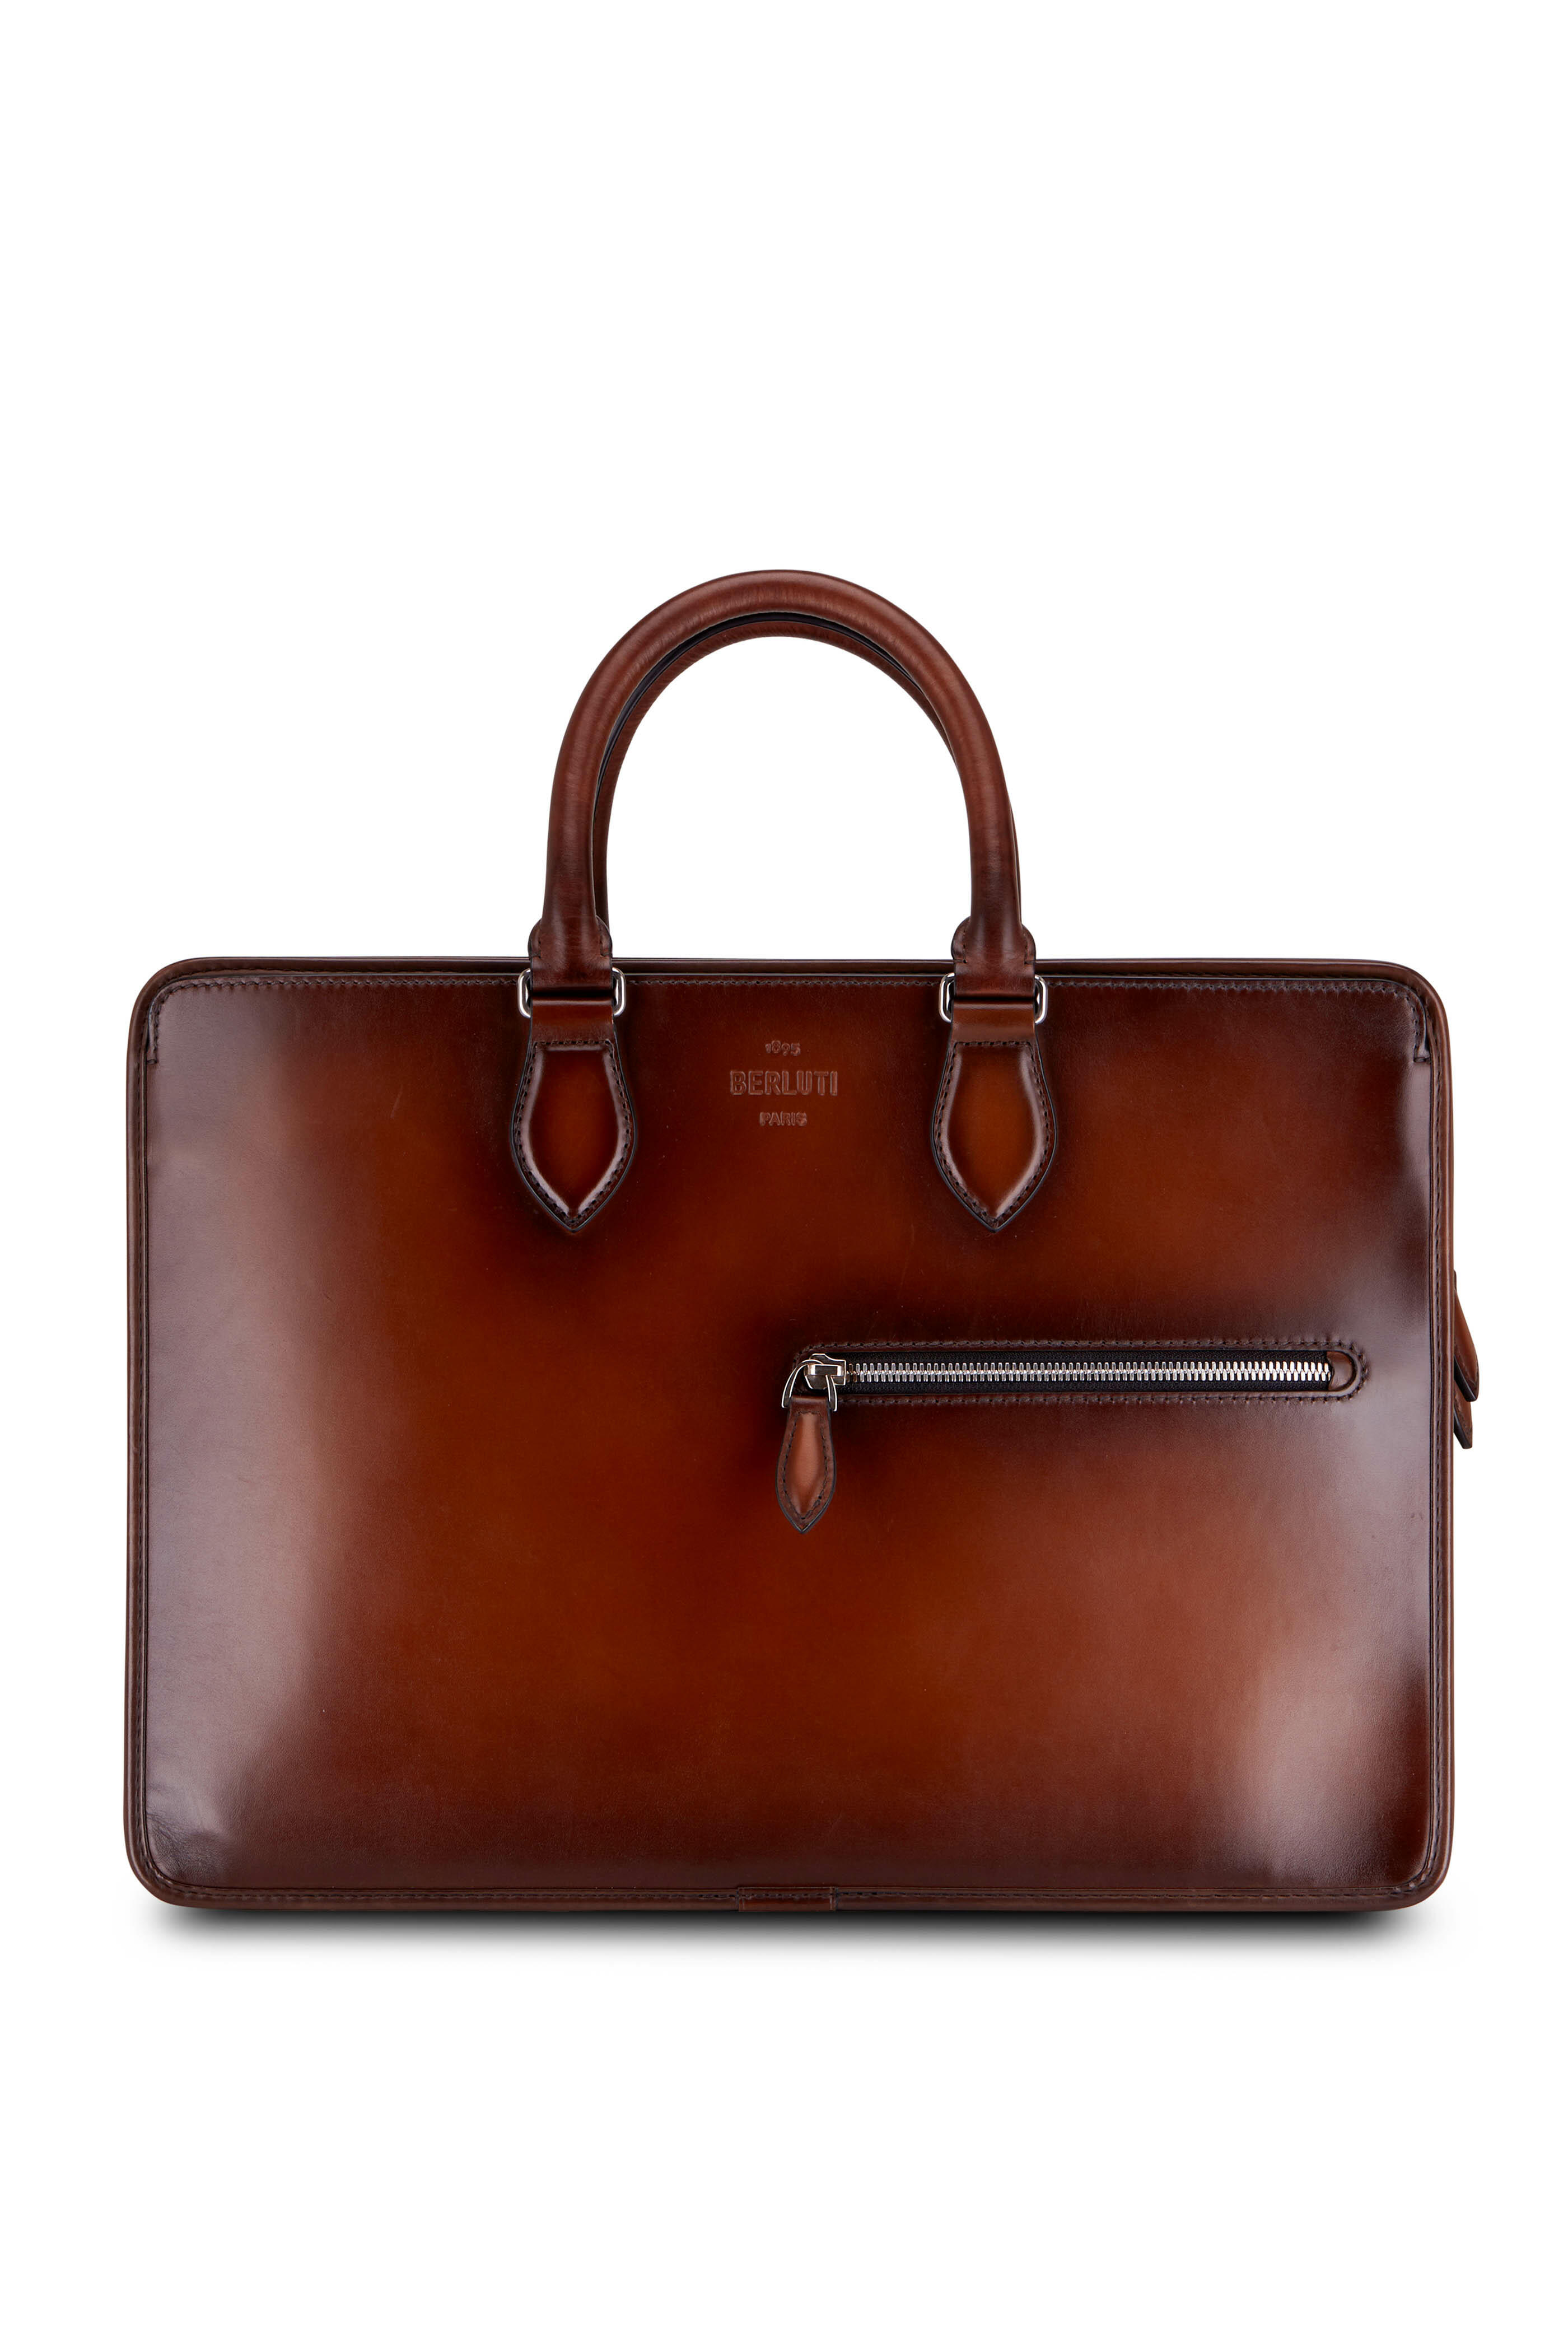 Berluti - Un Jour Cacao Intenso Brown Leather Briefcase